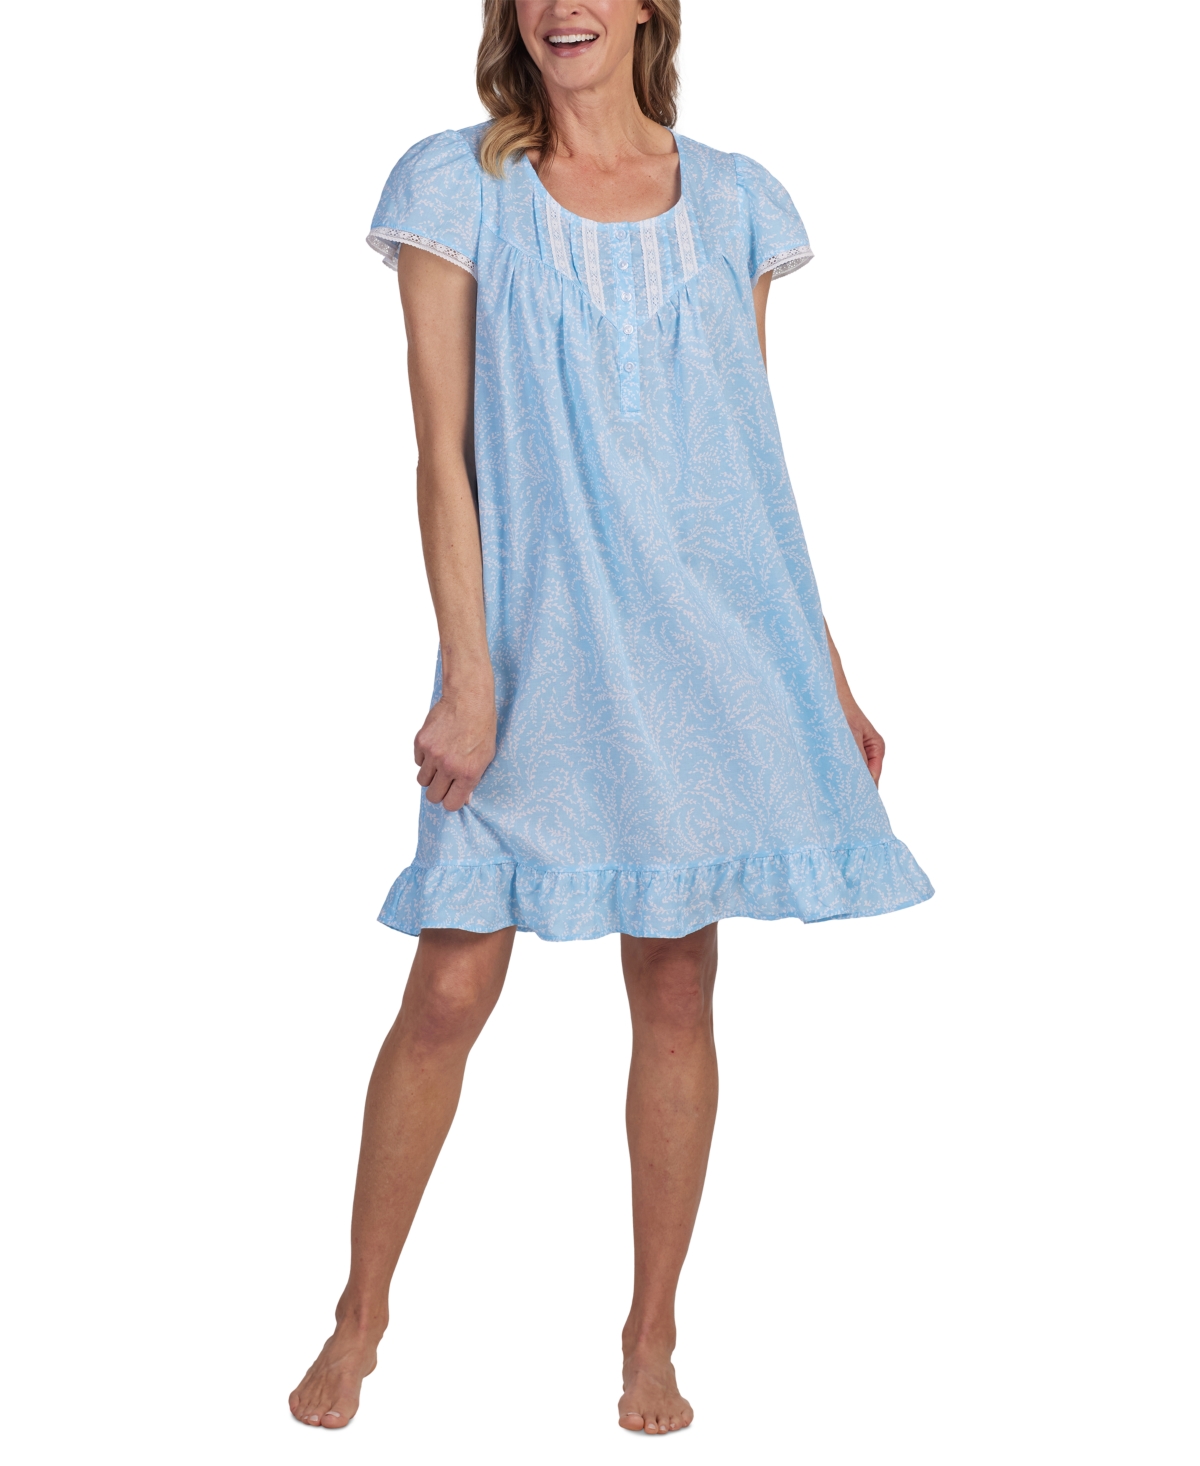 Women's Cotton Lace-Trim Nightgown - Blue Garden